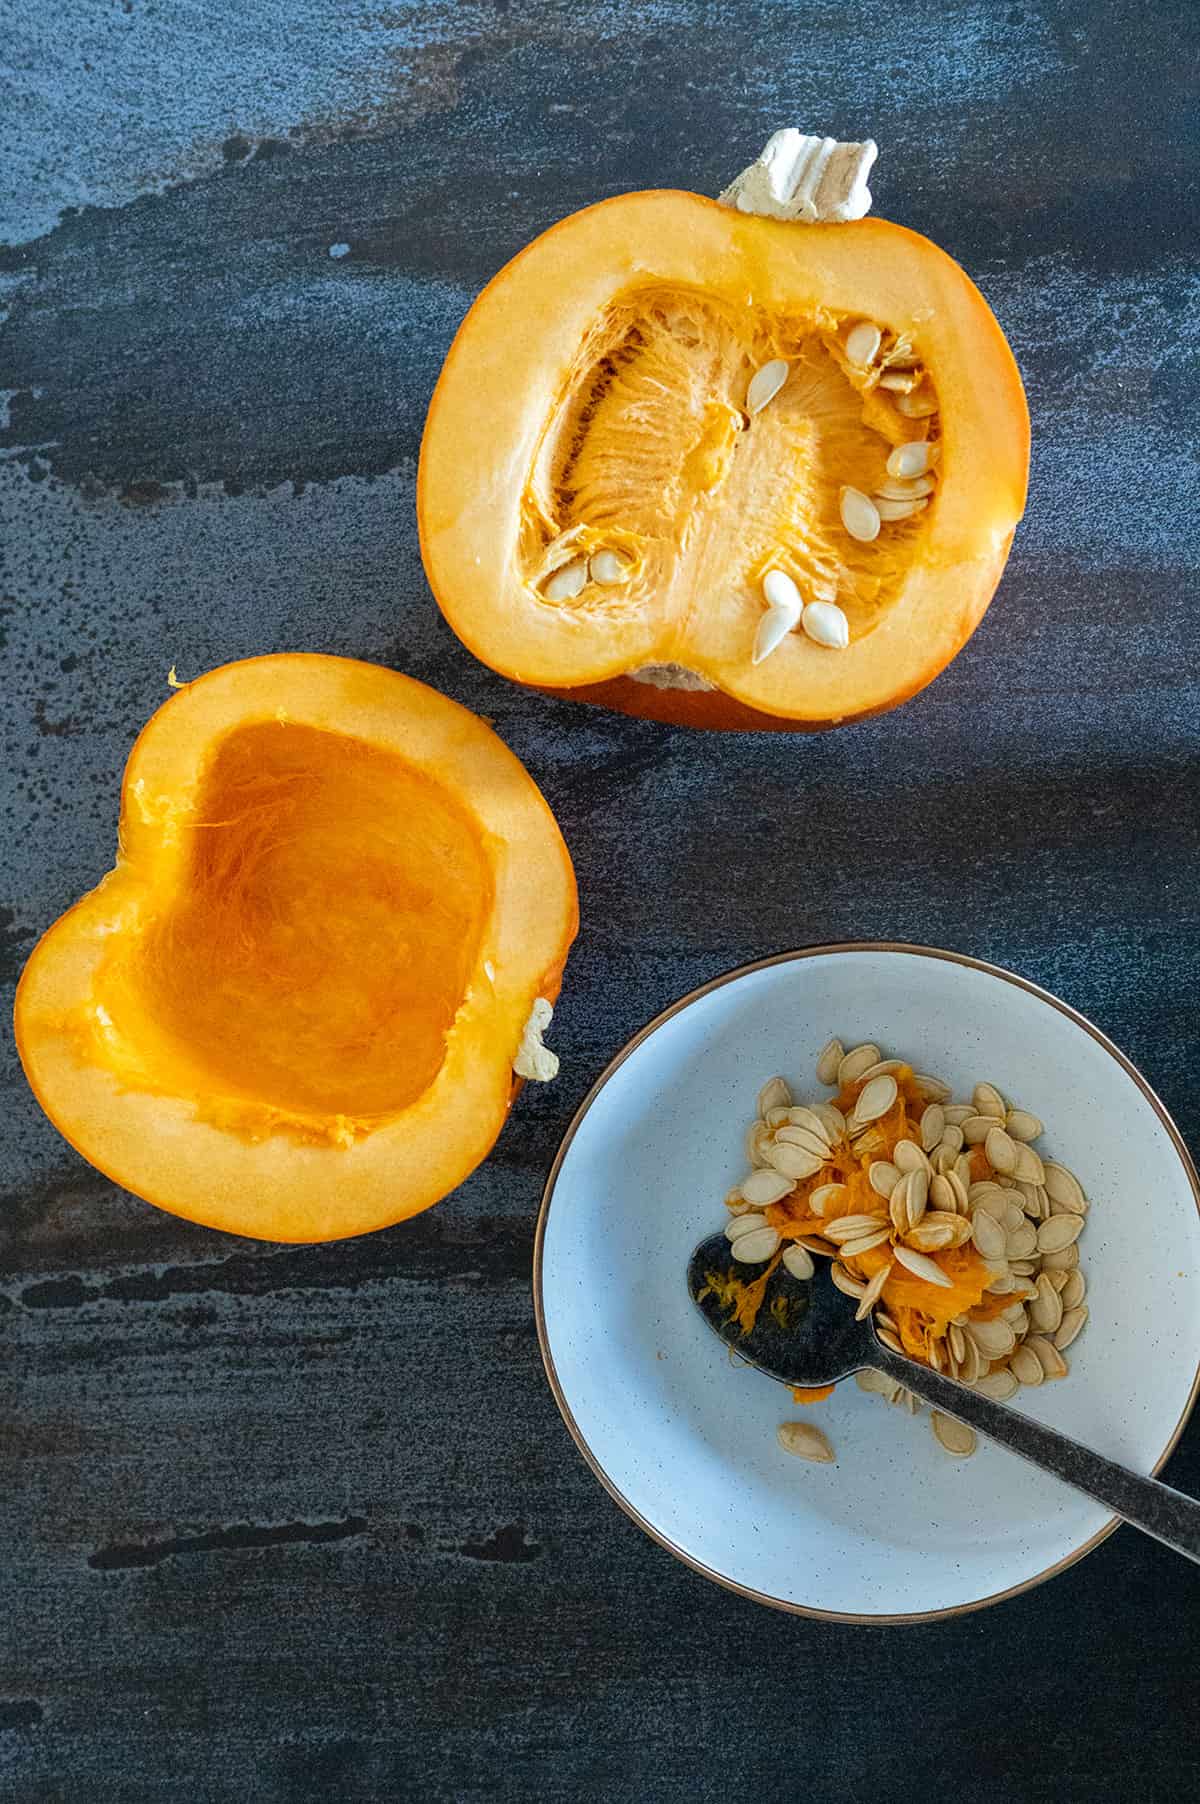 Using spoon to scoop pumpkin seeds out of pumpkin half.